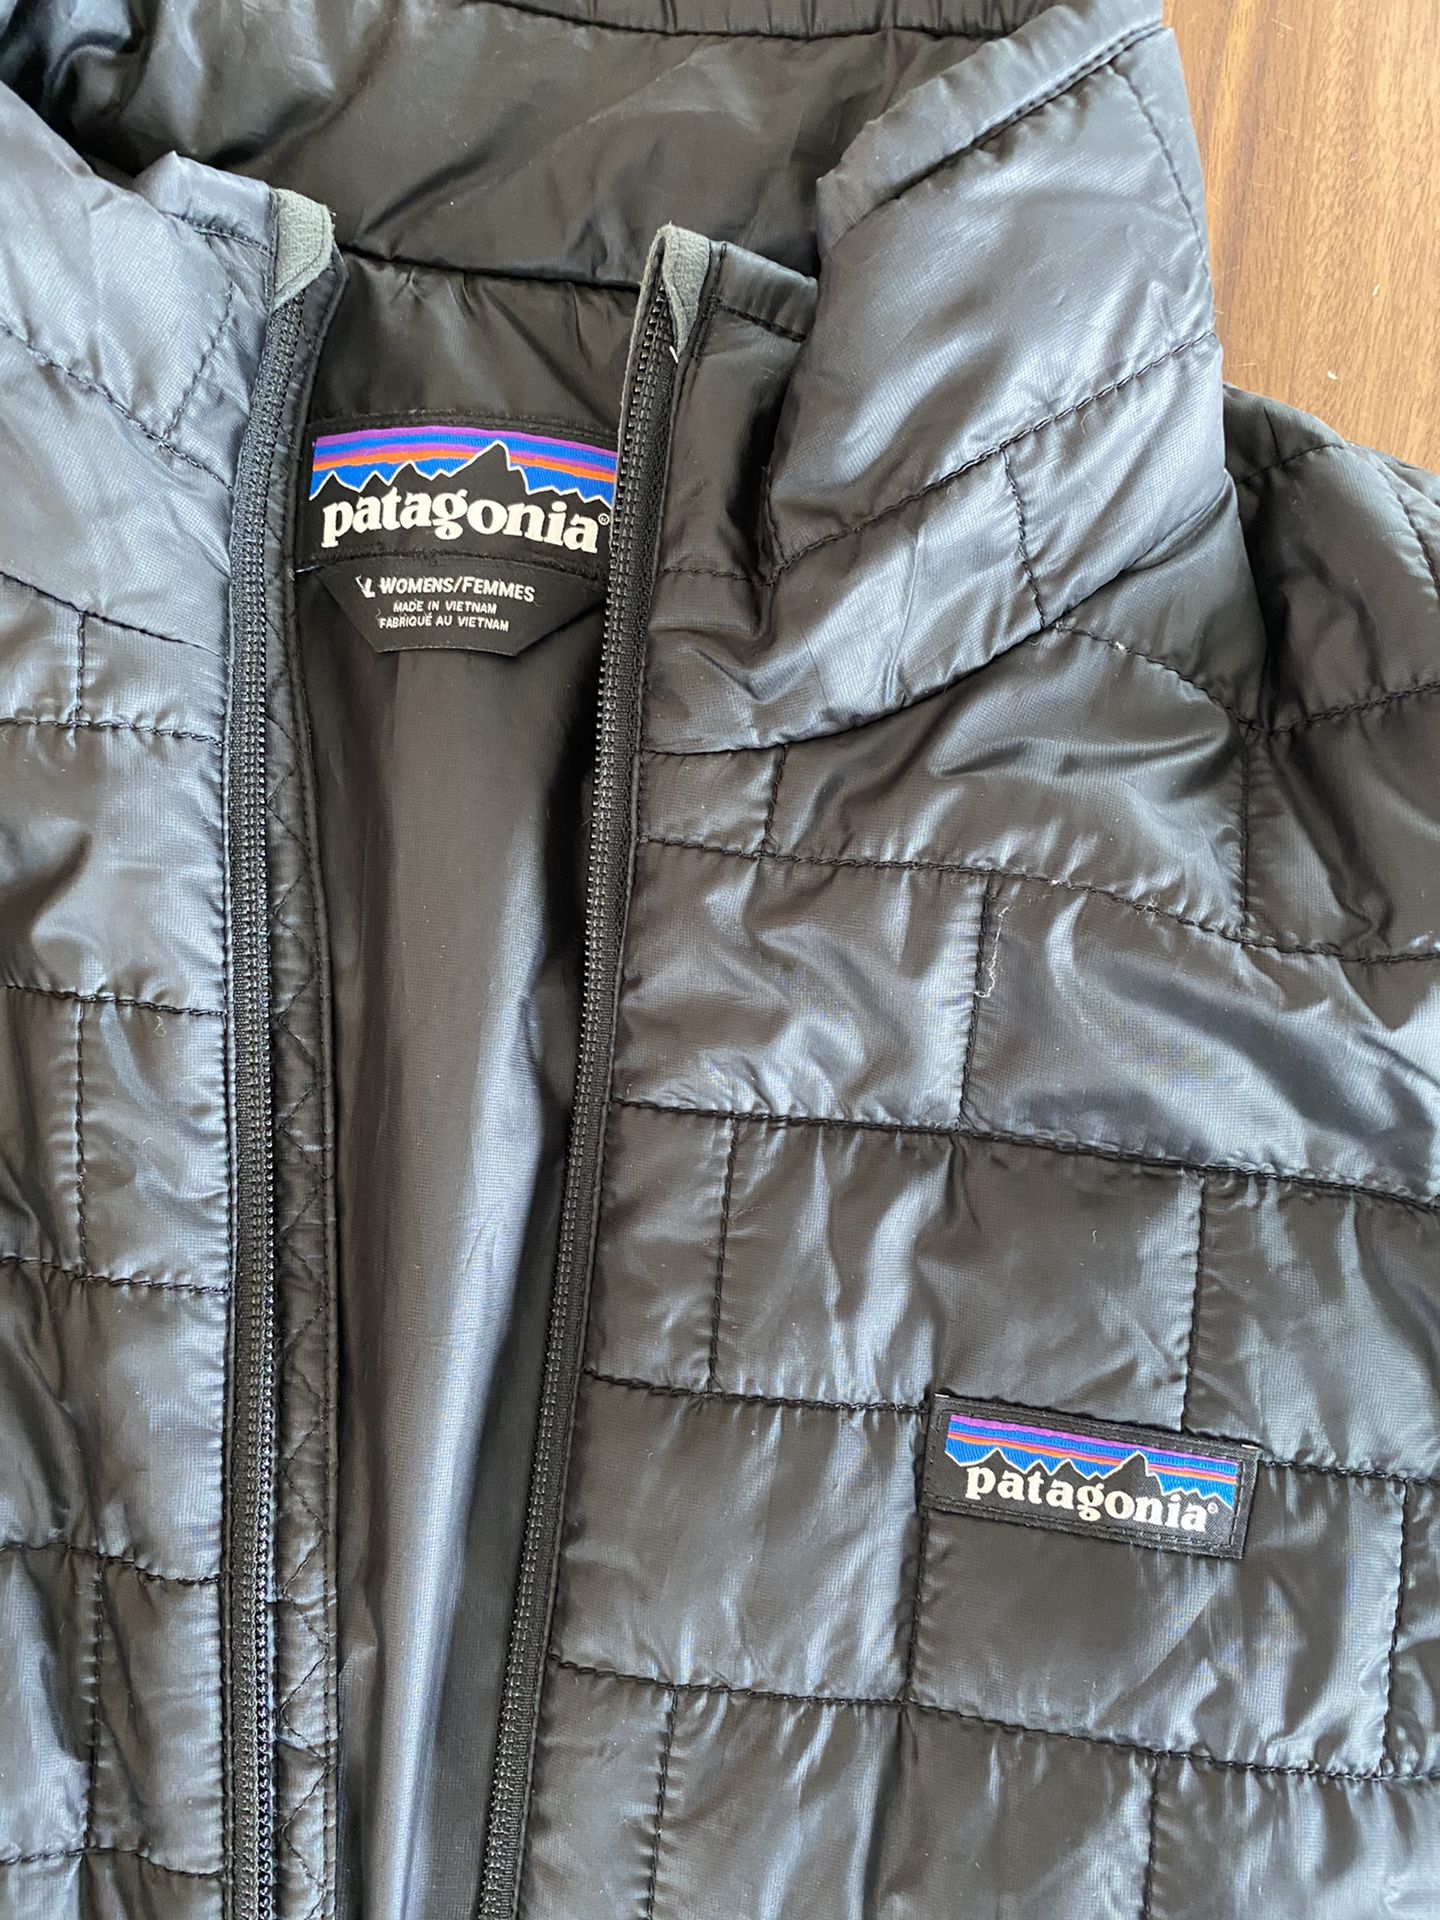 Patagonia Women’s jacket size L